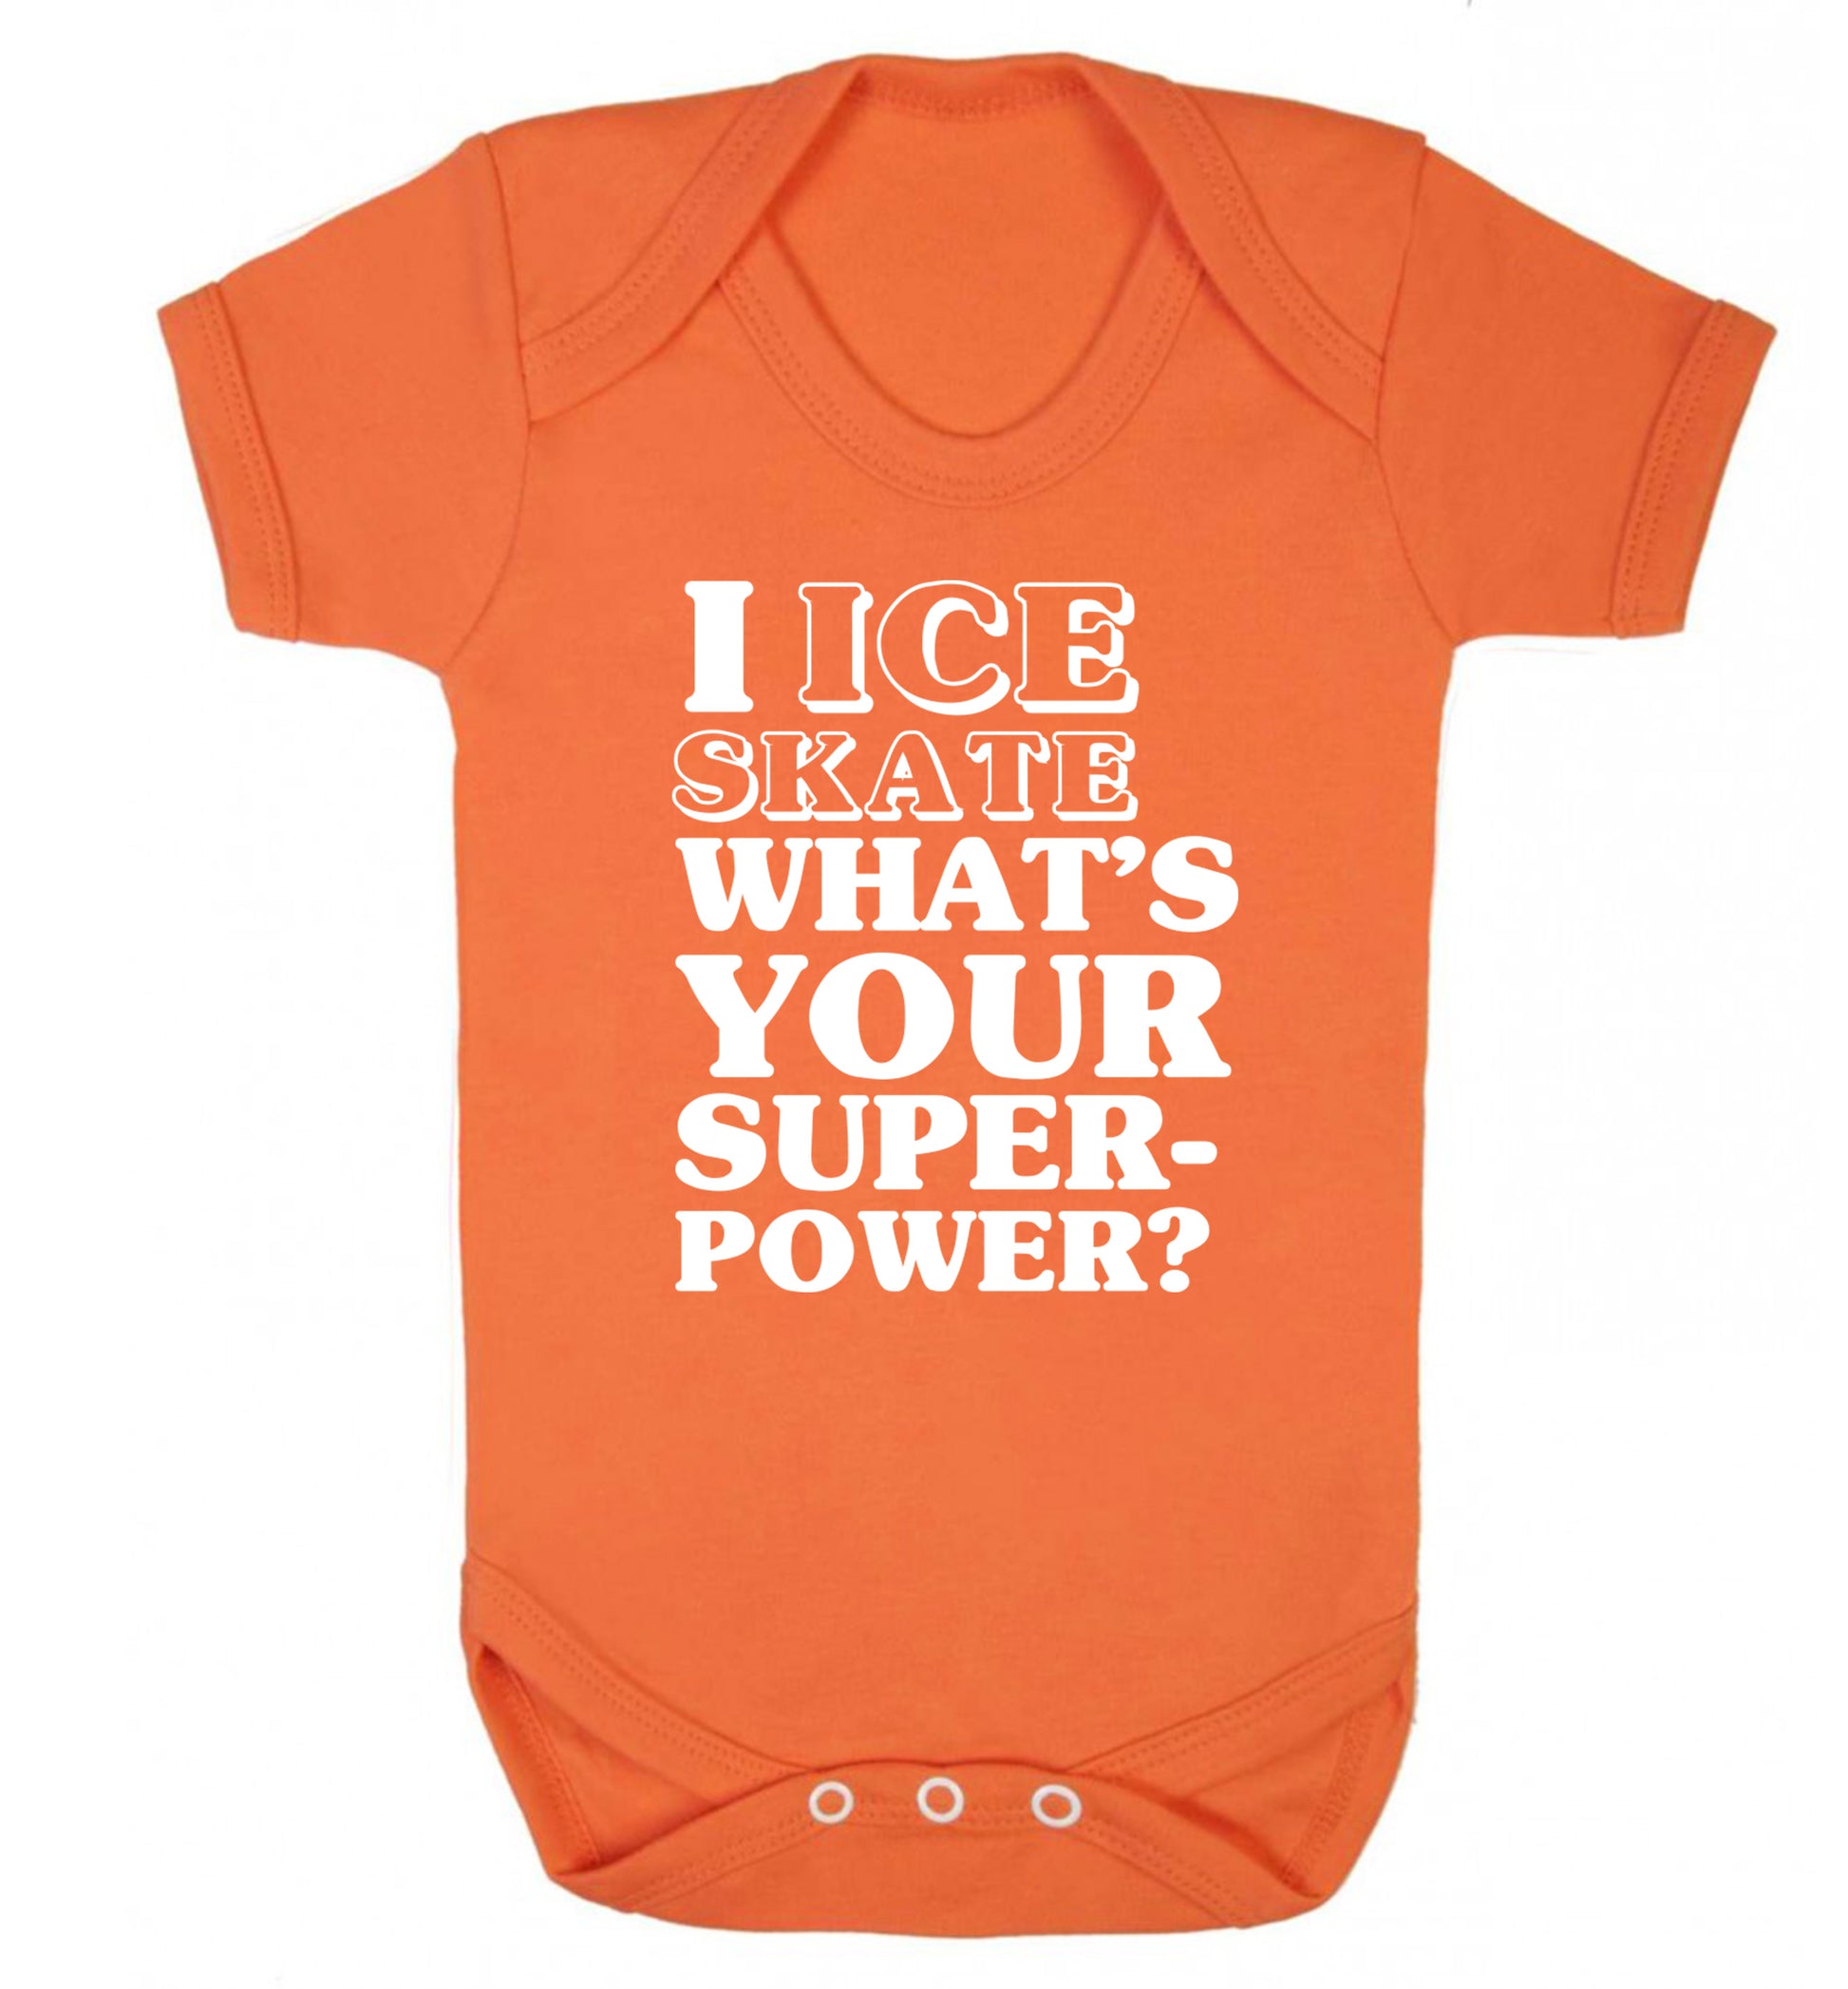 I ice skate what's your superpower? Baby Vest orange 18-24 months